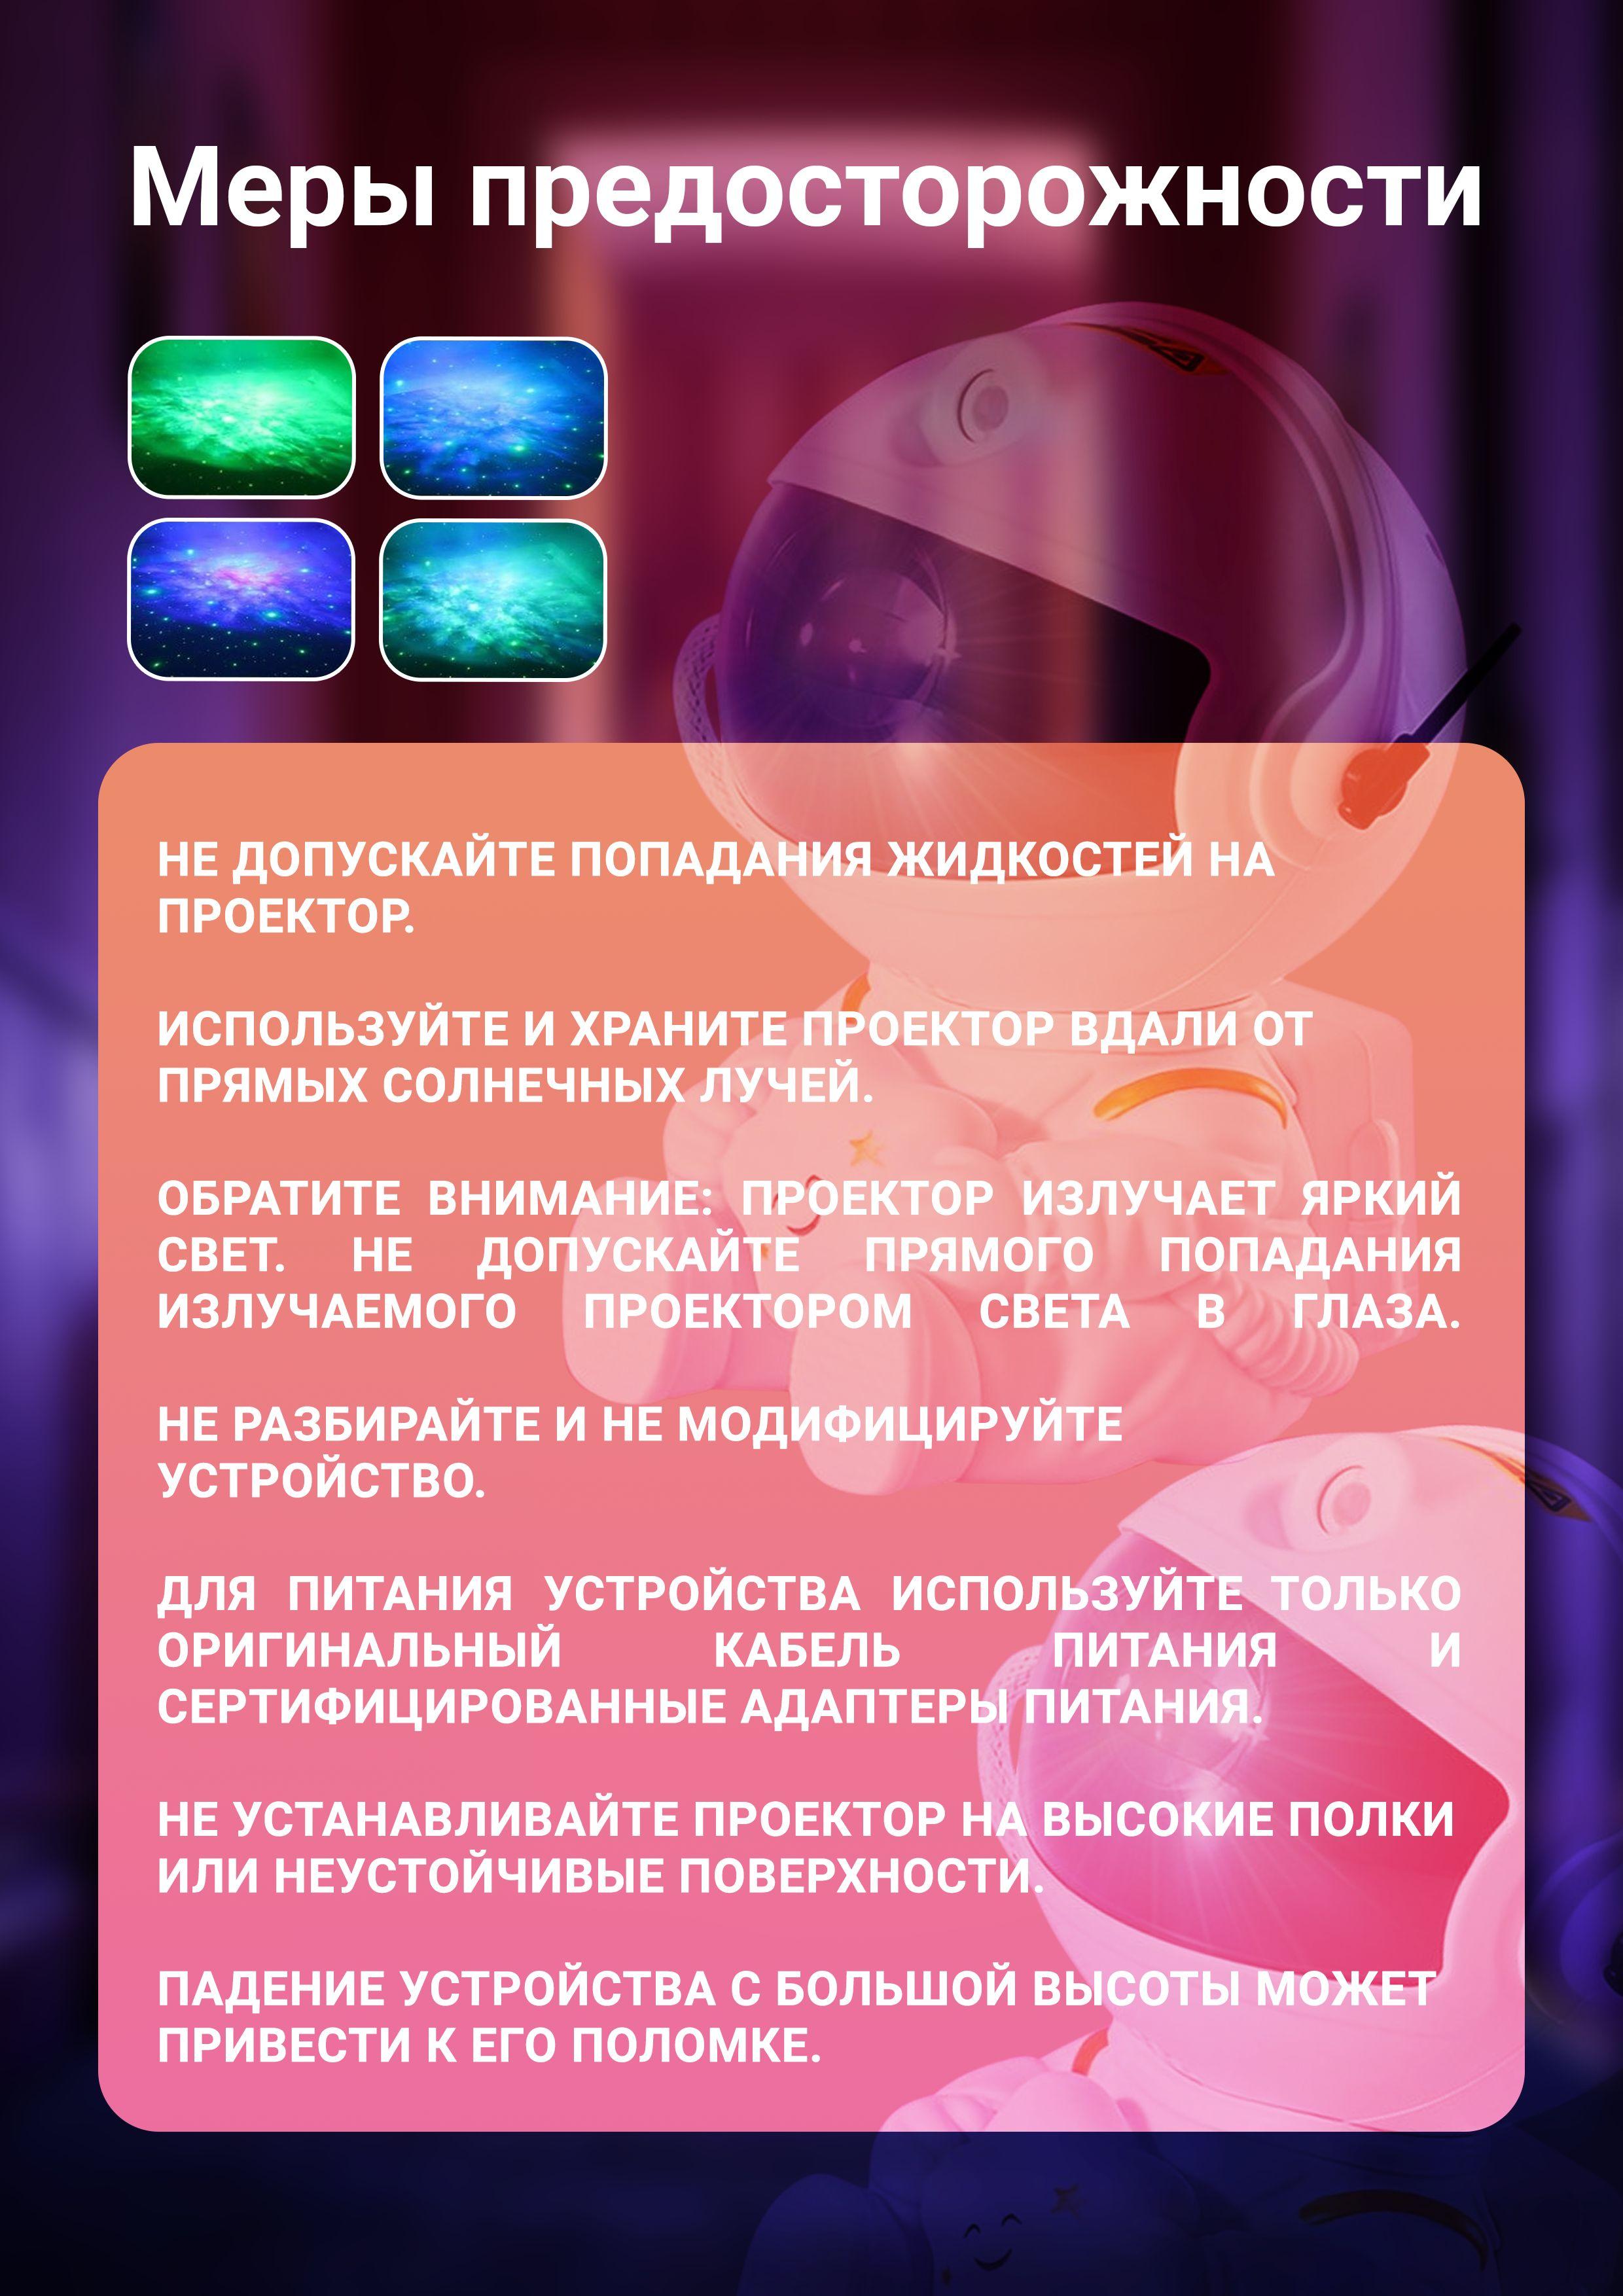 https://cdn1.ozone.ru/s3/multimedia-t/6504573329.jpg